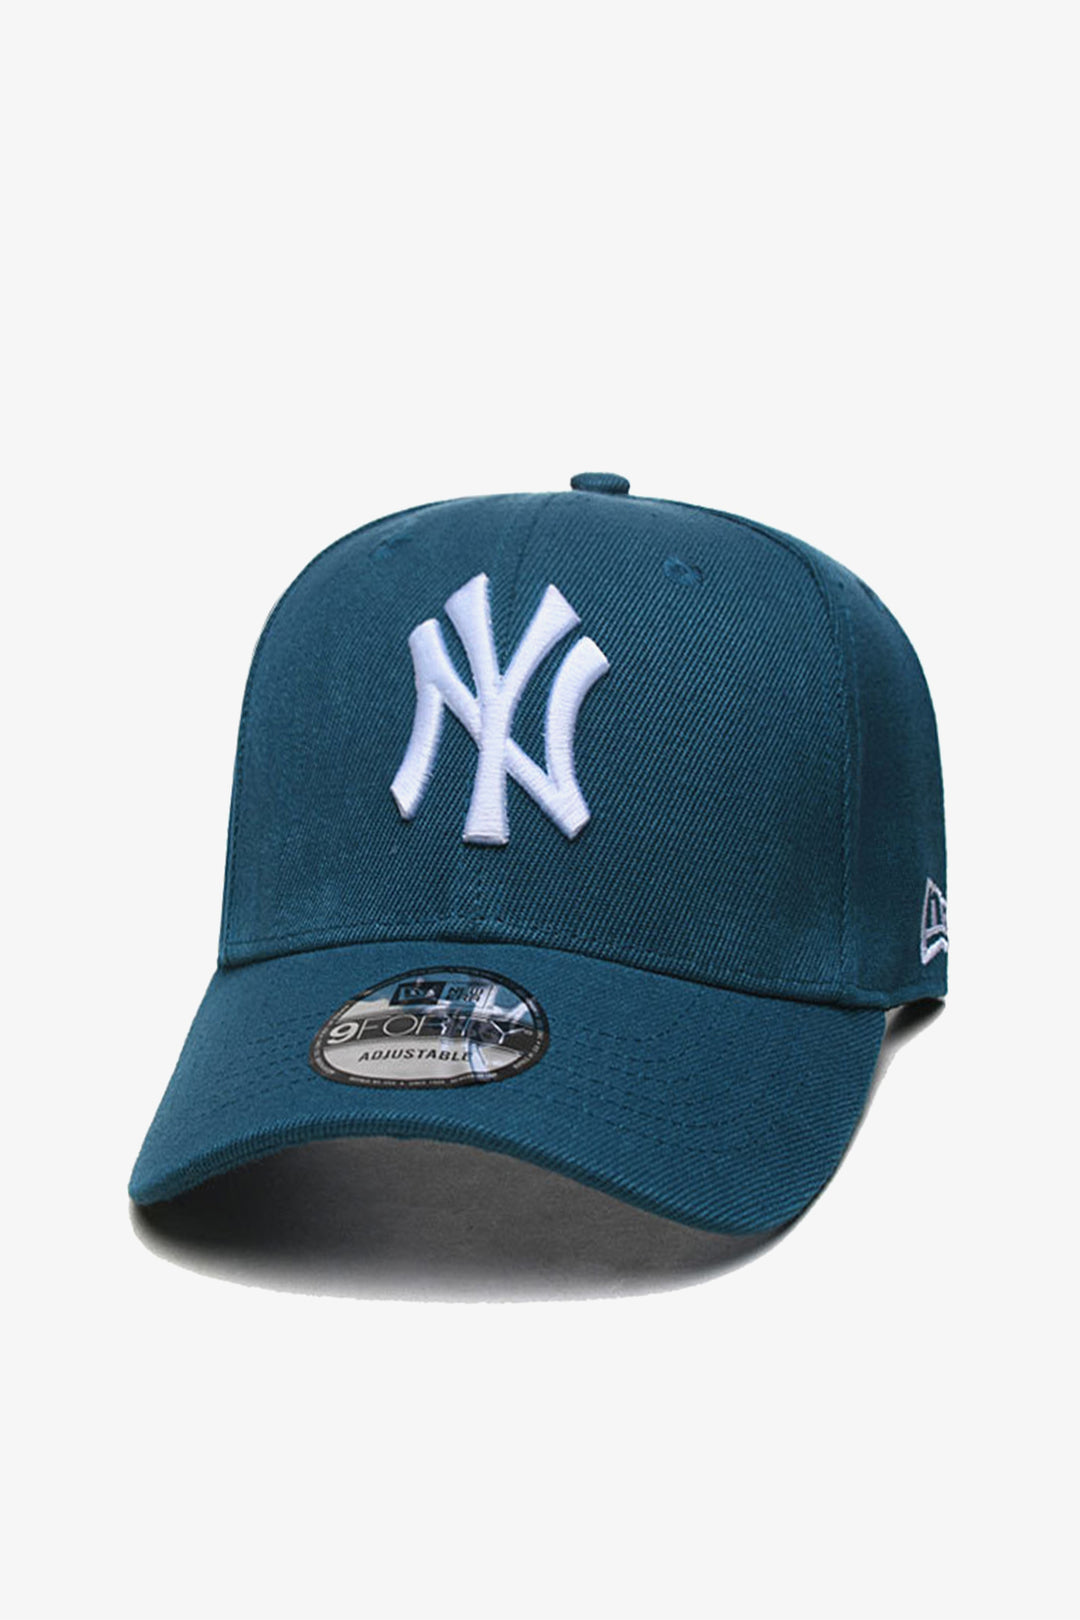 NY Classic Teal Blue Baseball Cap - S23 - MCP081R  - S23 - MCP118R